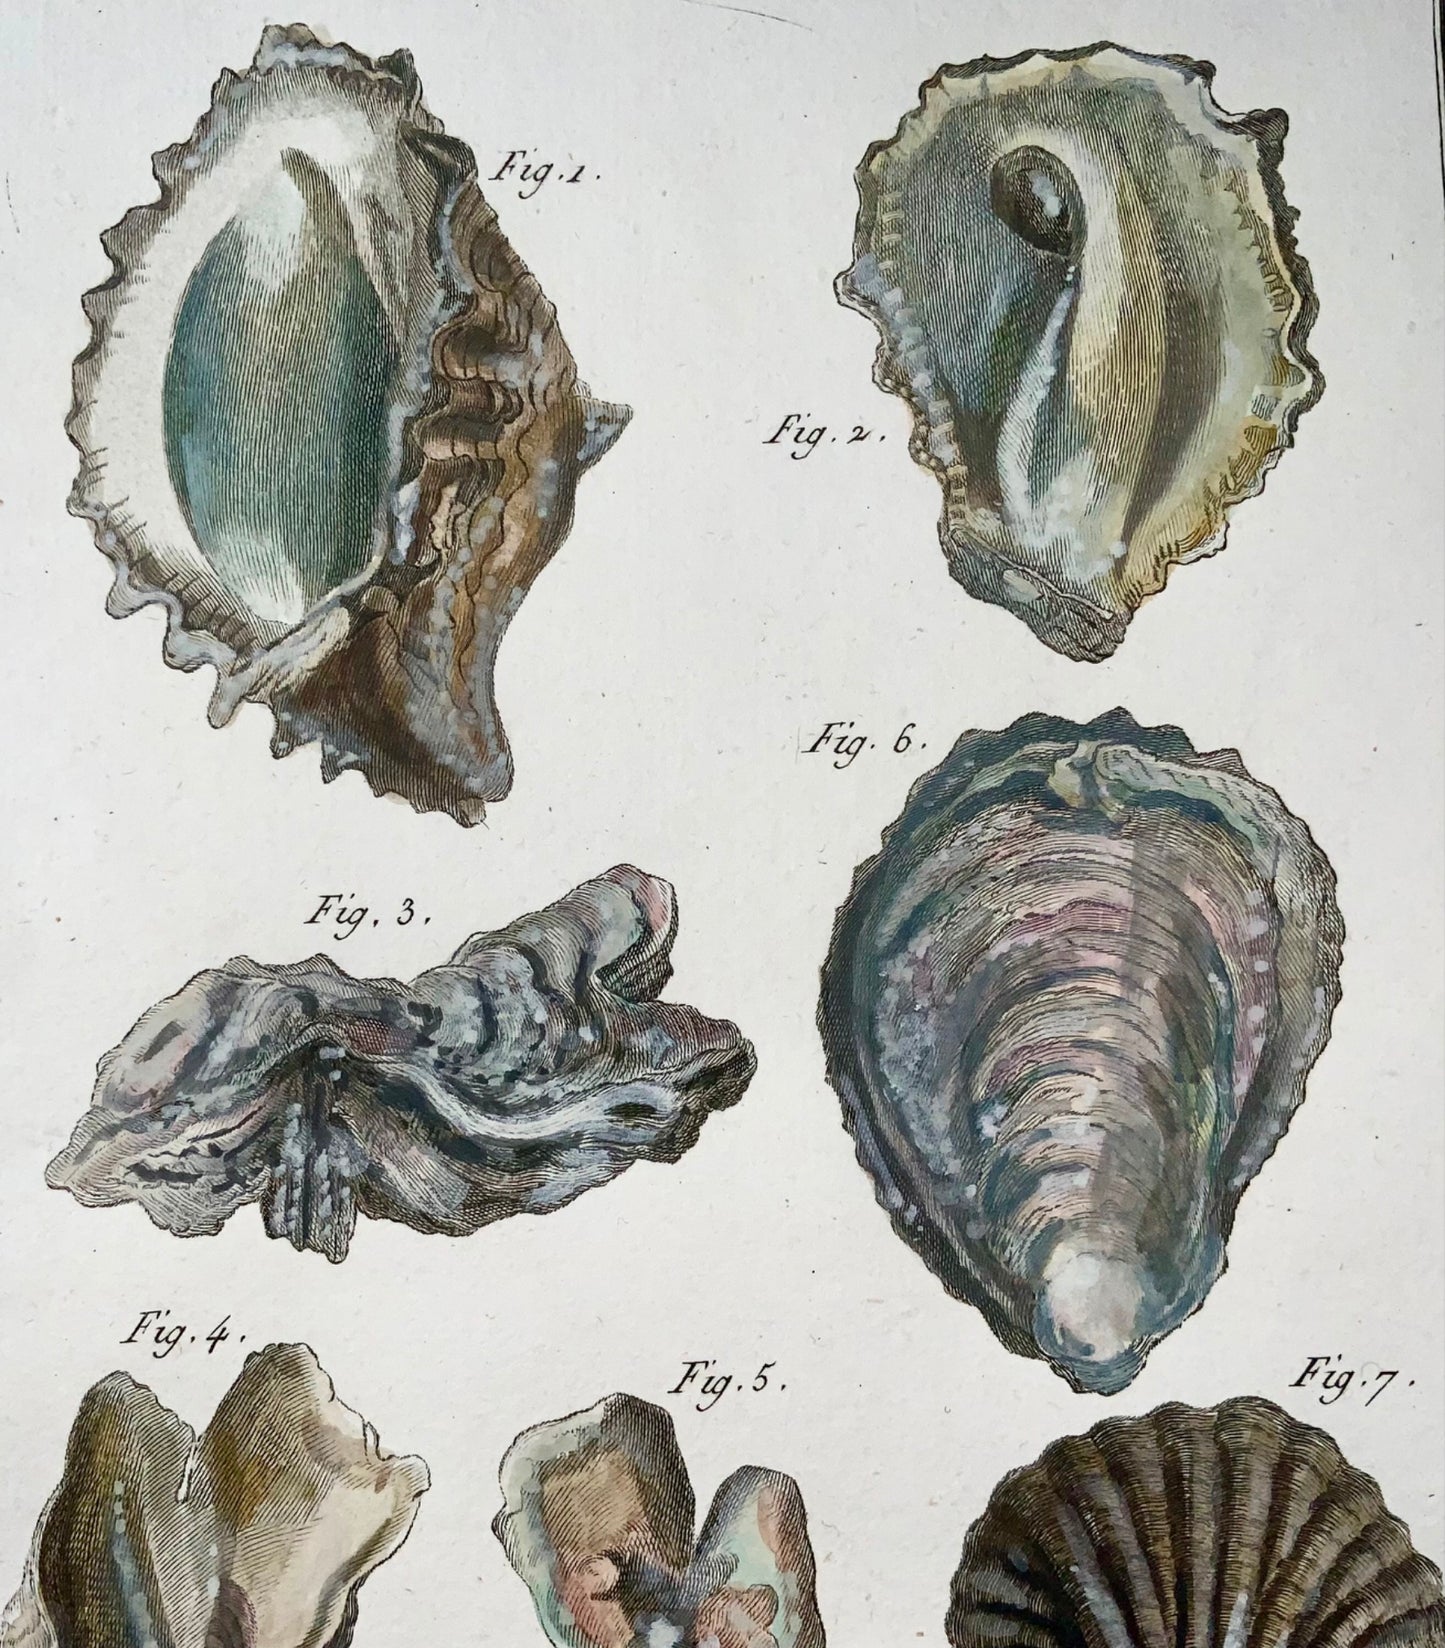 1789 Huîtres, Benard sc. in-quarto, couleur à la main, gravure, vie marine